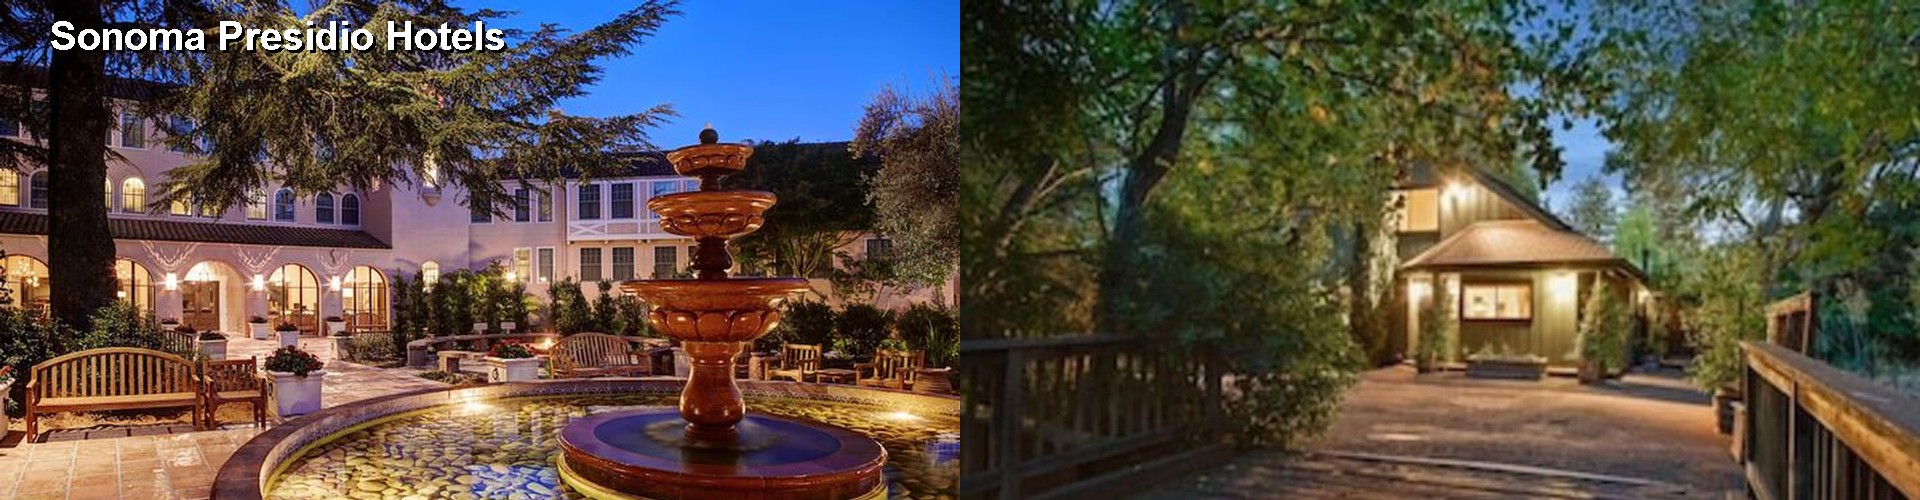 5 Best Hotels near Sonoma Presidio